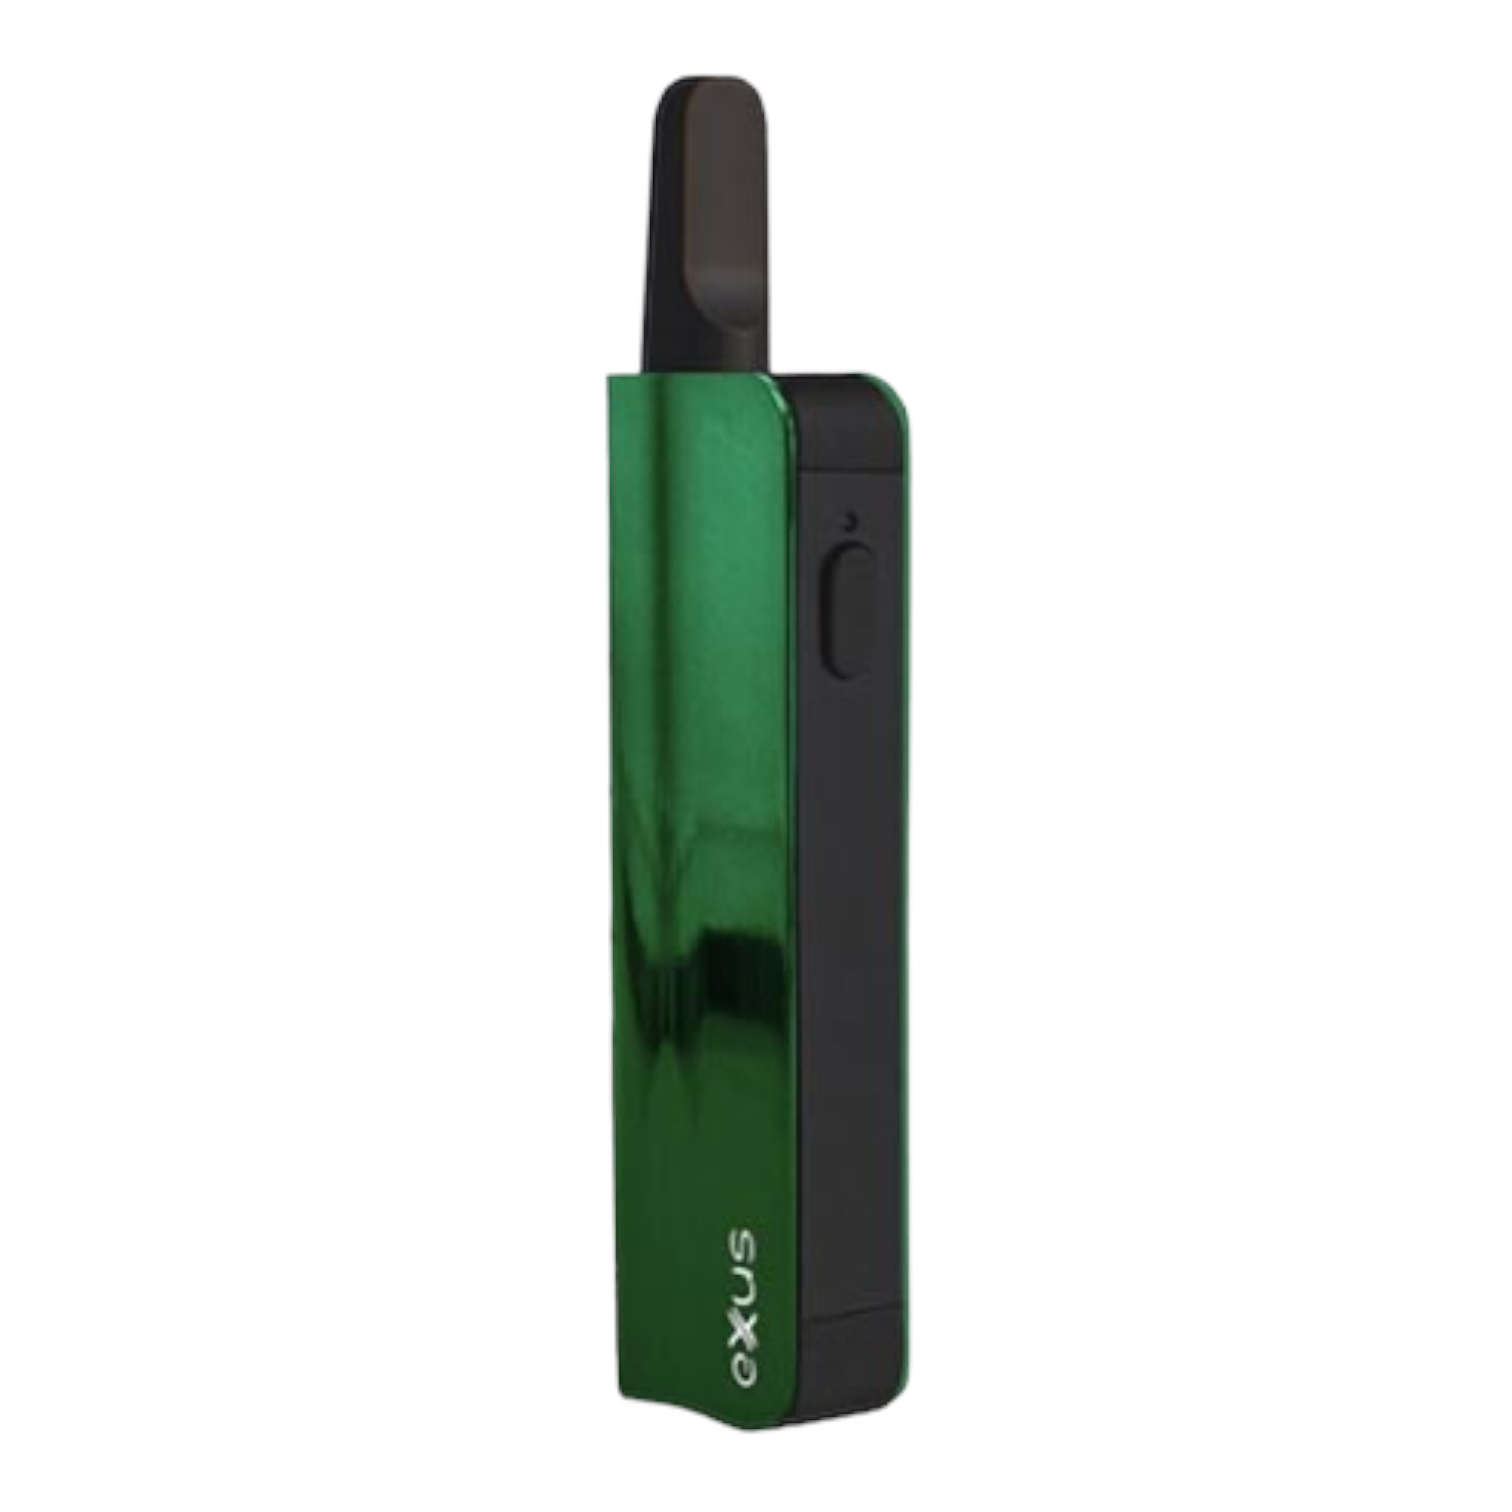 Exxus Snap - Variable Voltage 510 Cartridge Battery - Crypto Green